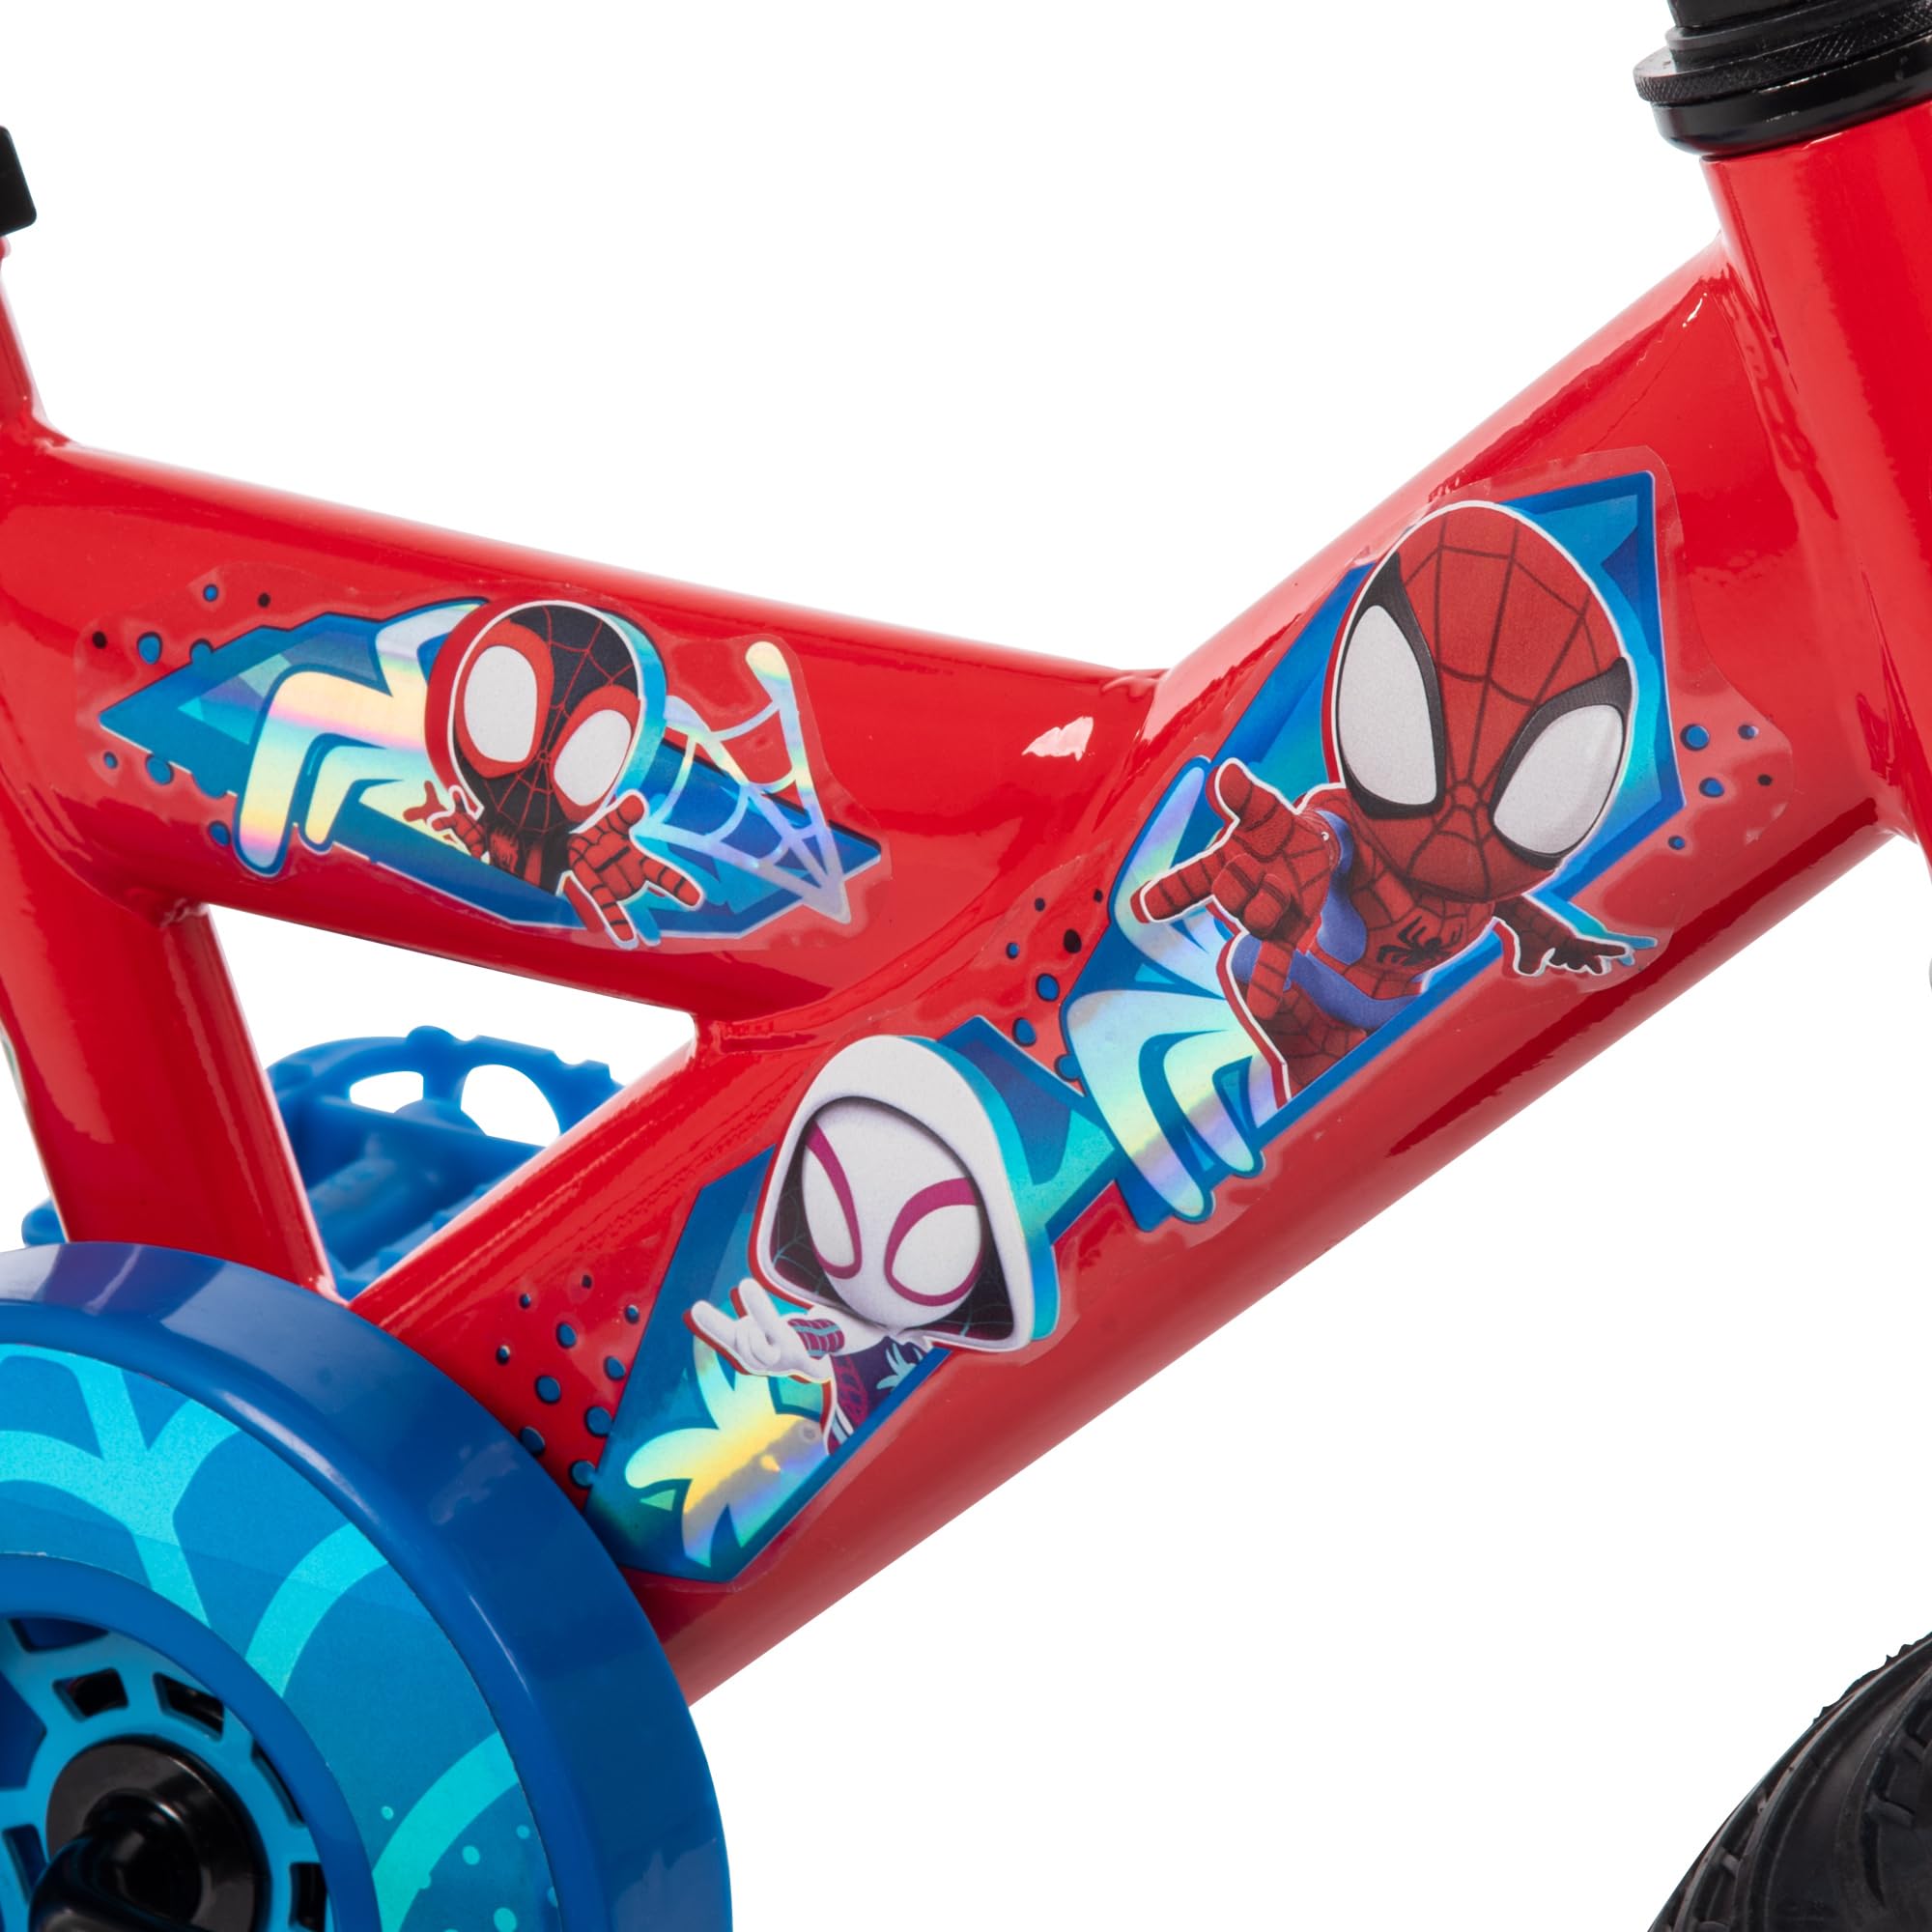 Huffy 12” Spidey & His Amazing Friends Boy’s Bike with Training Wheels